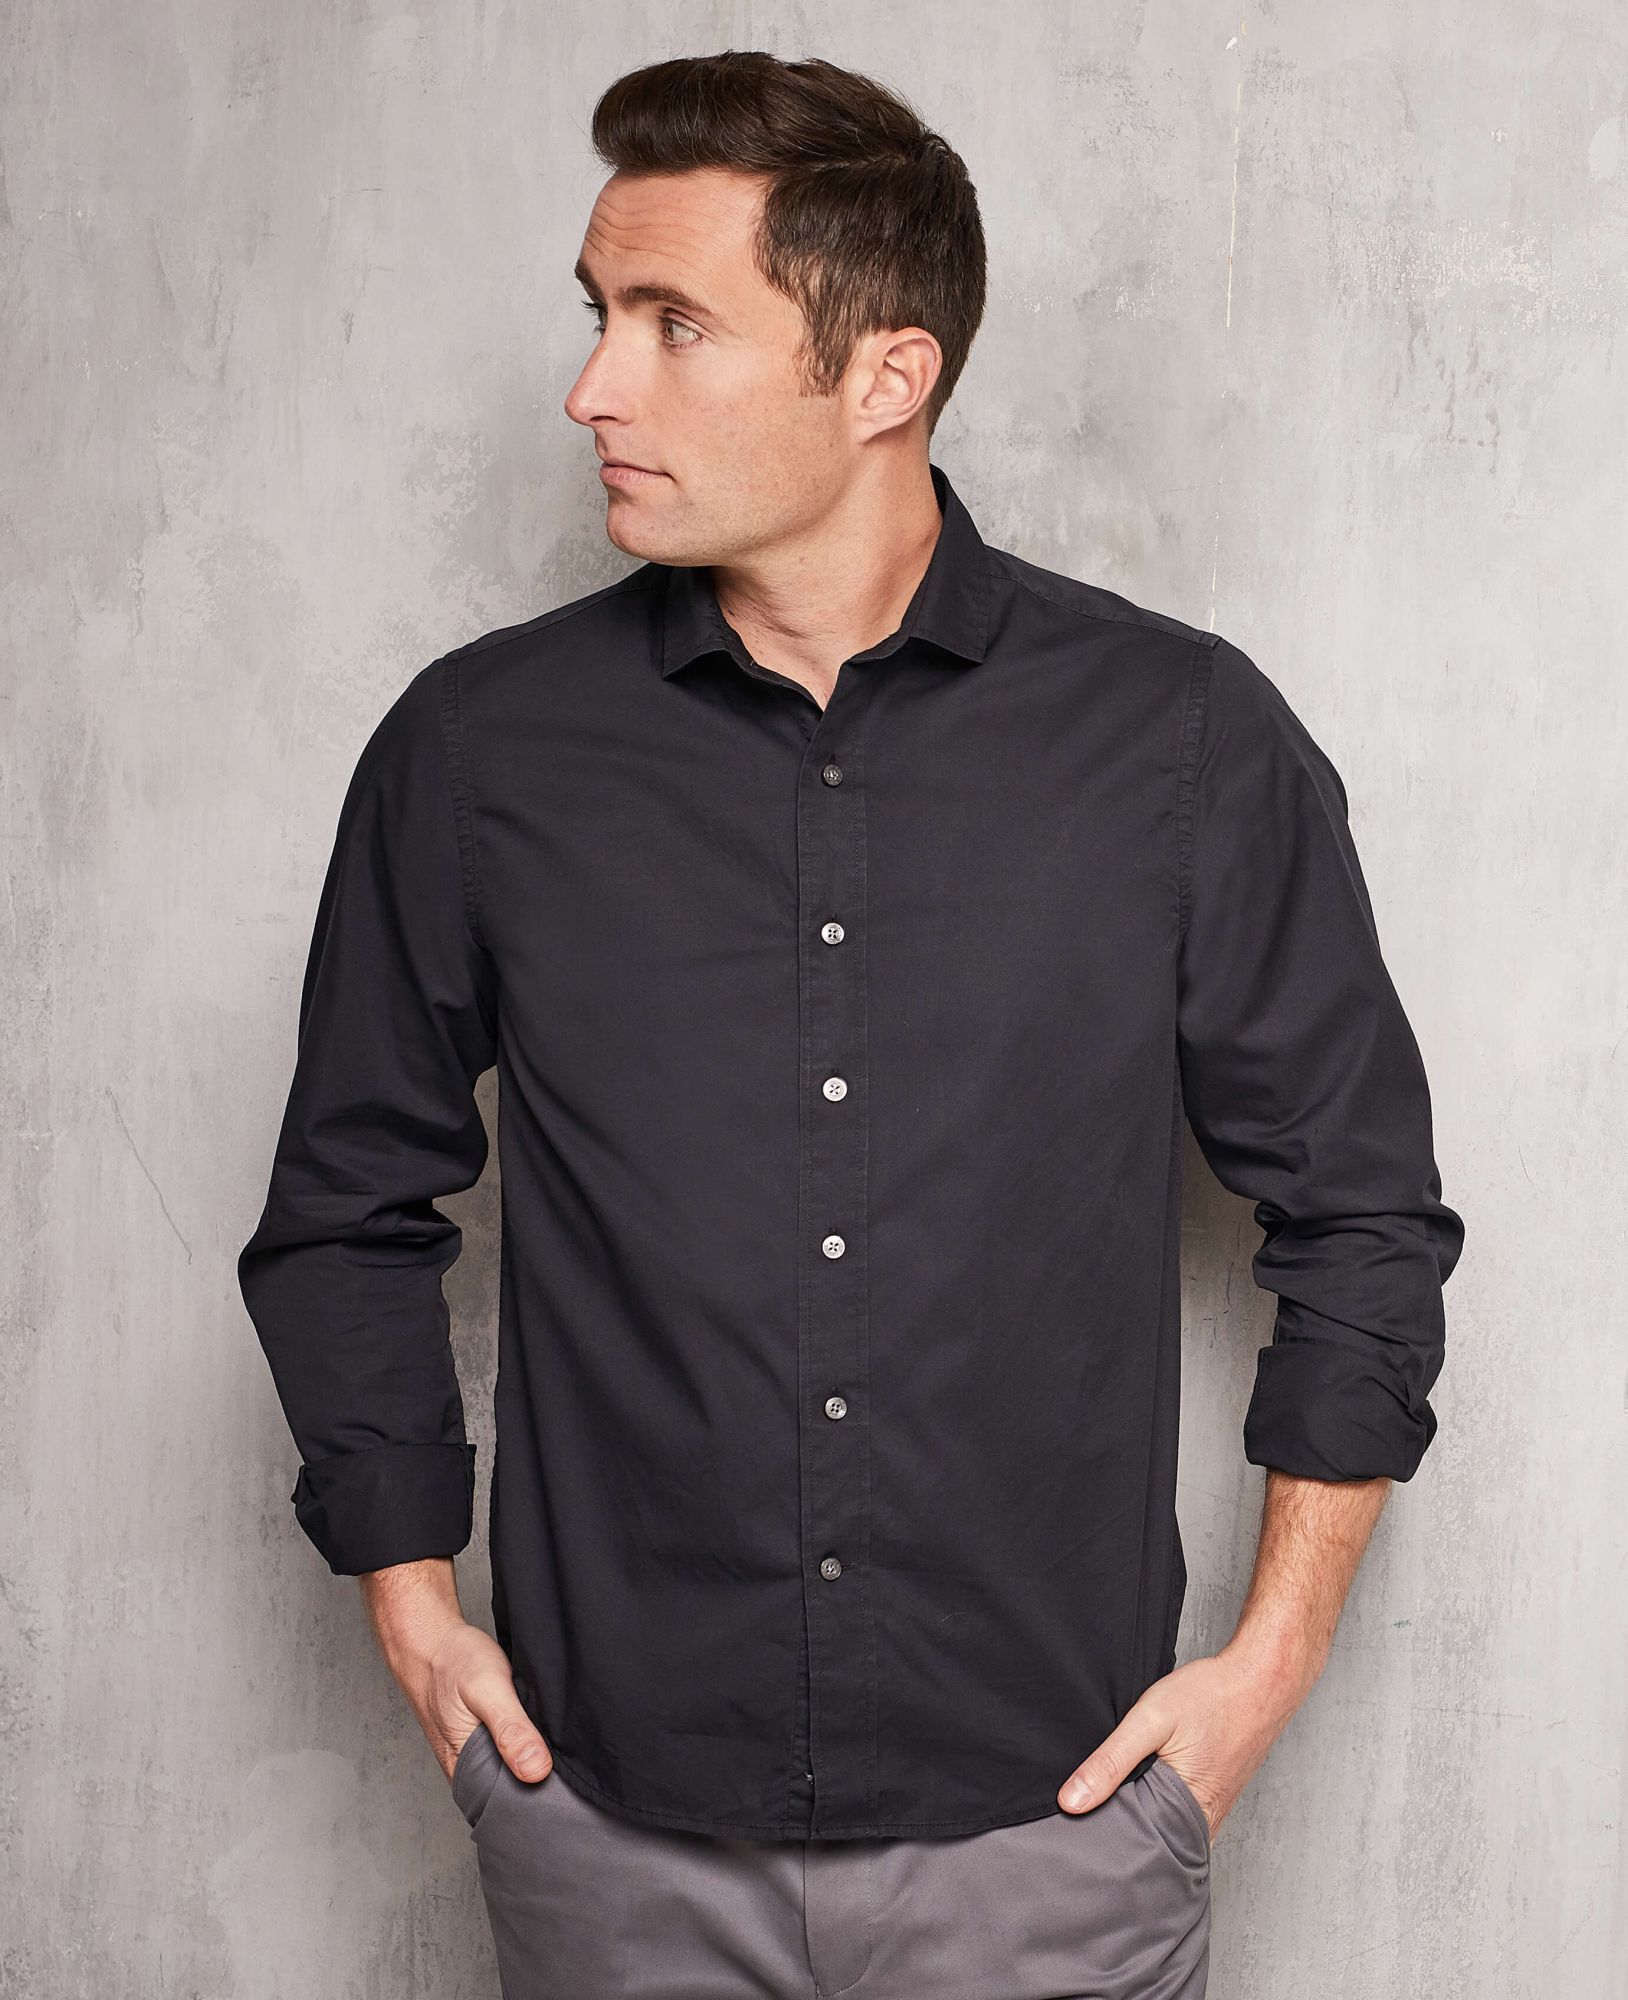 Black Twill Slim Fit Shirt in Shorter Length S Standard